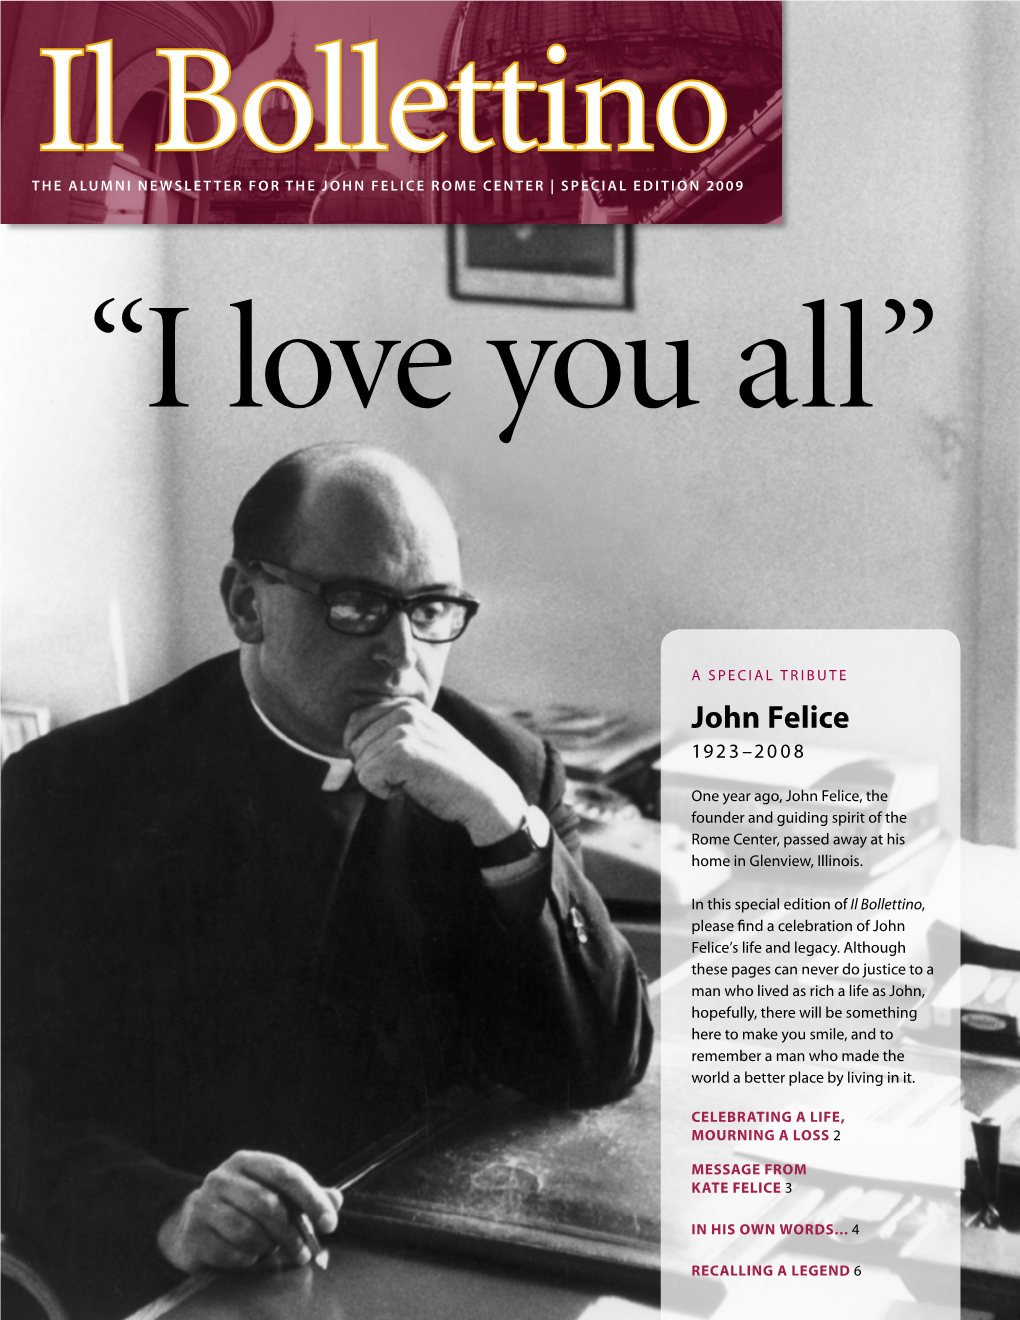 John Felice Rome Center | Special Edition 2009 “I Love You All”